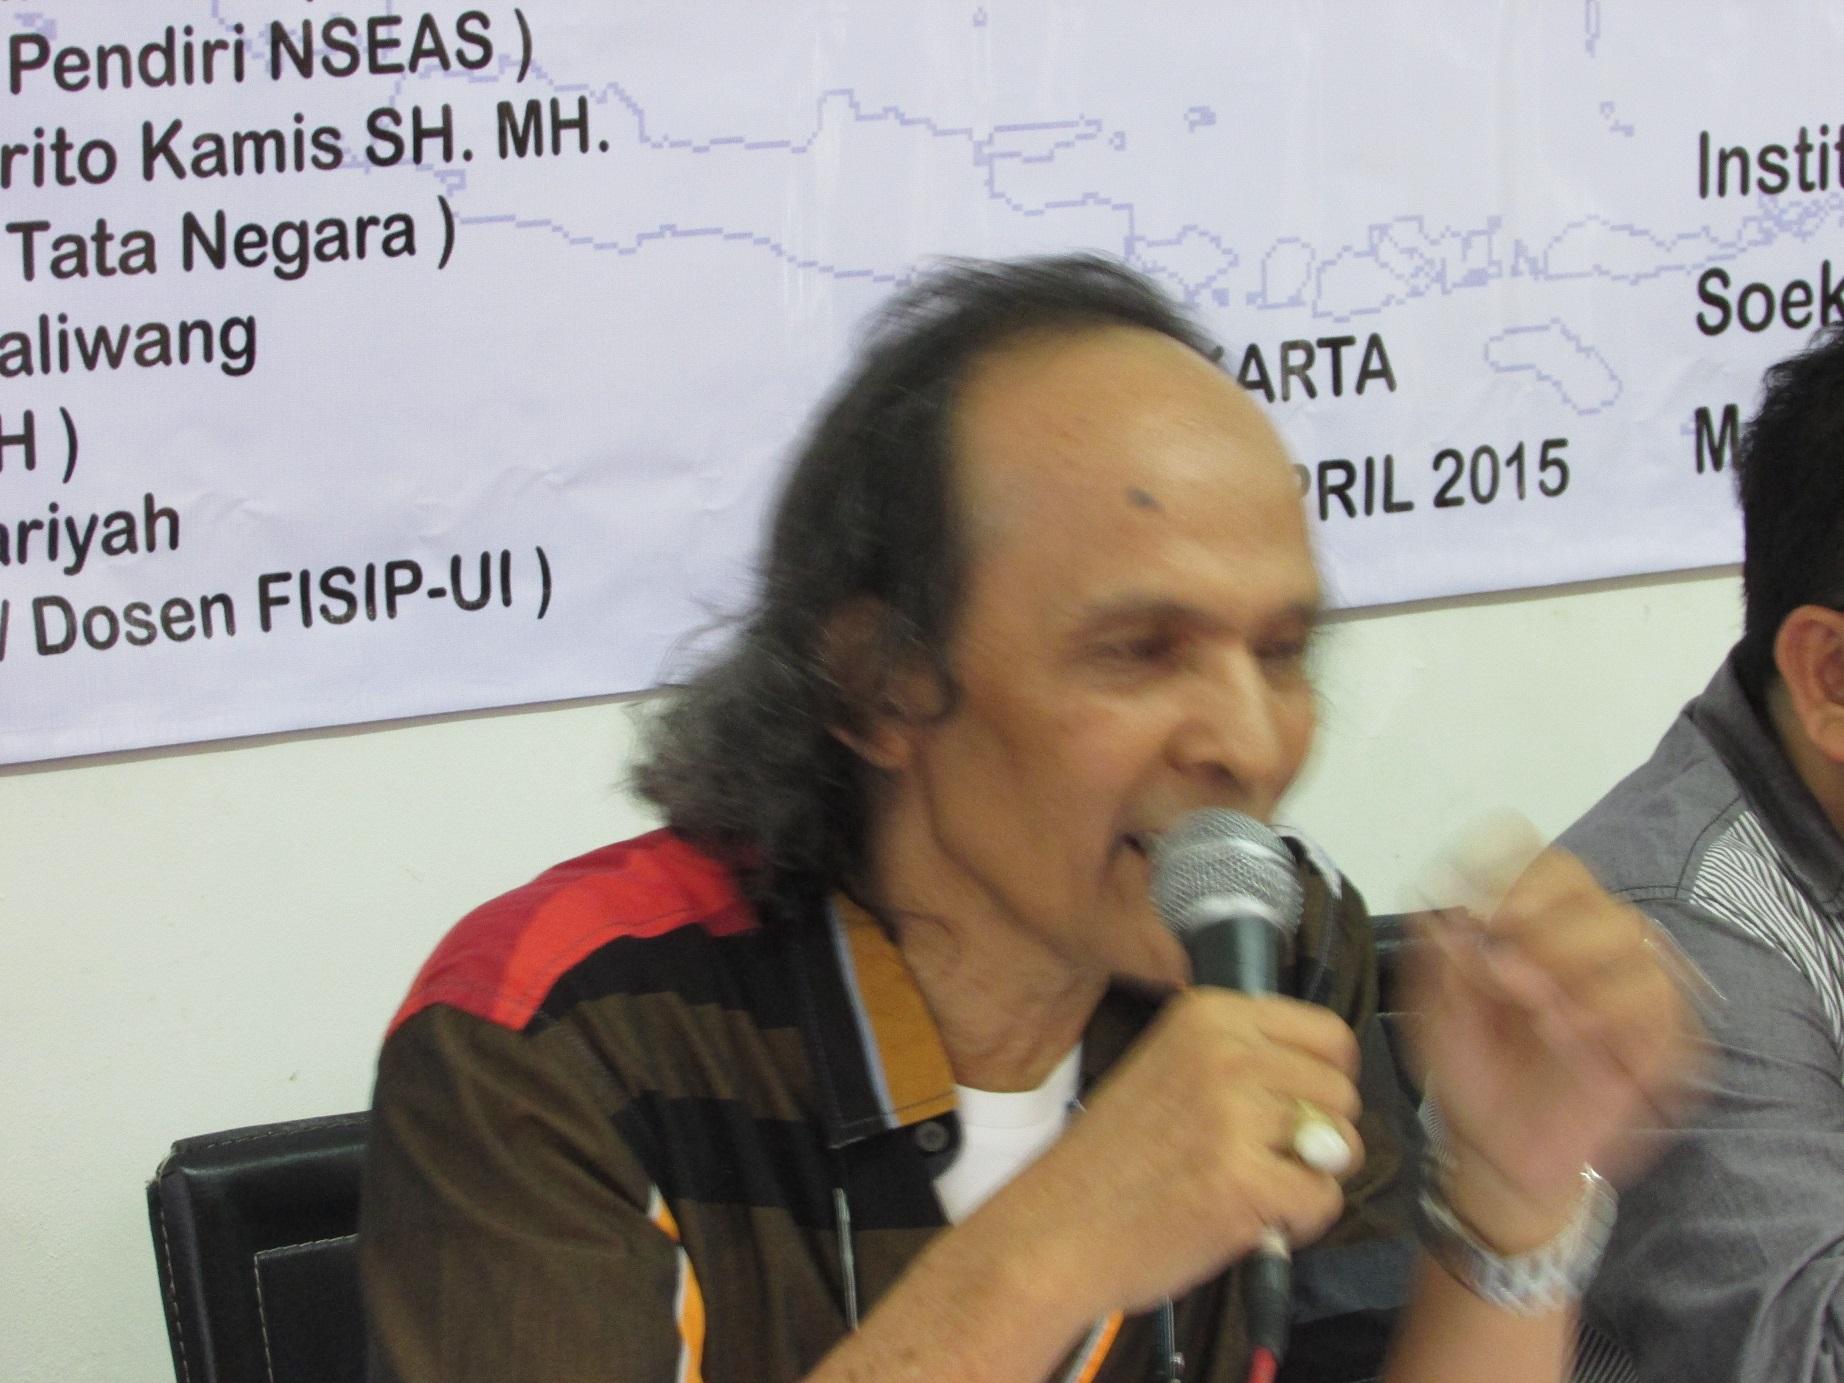 NSEAS Meminta DPRD DKI Jakarta Lanjutkan Haknya Hingga Pemakzulan Ahok